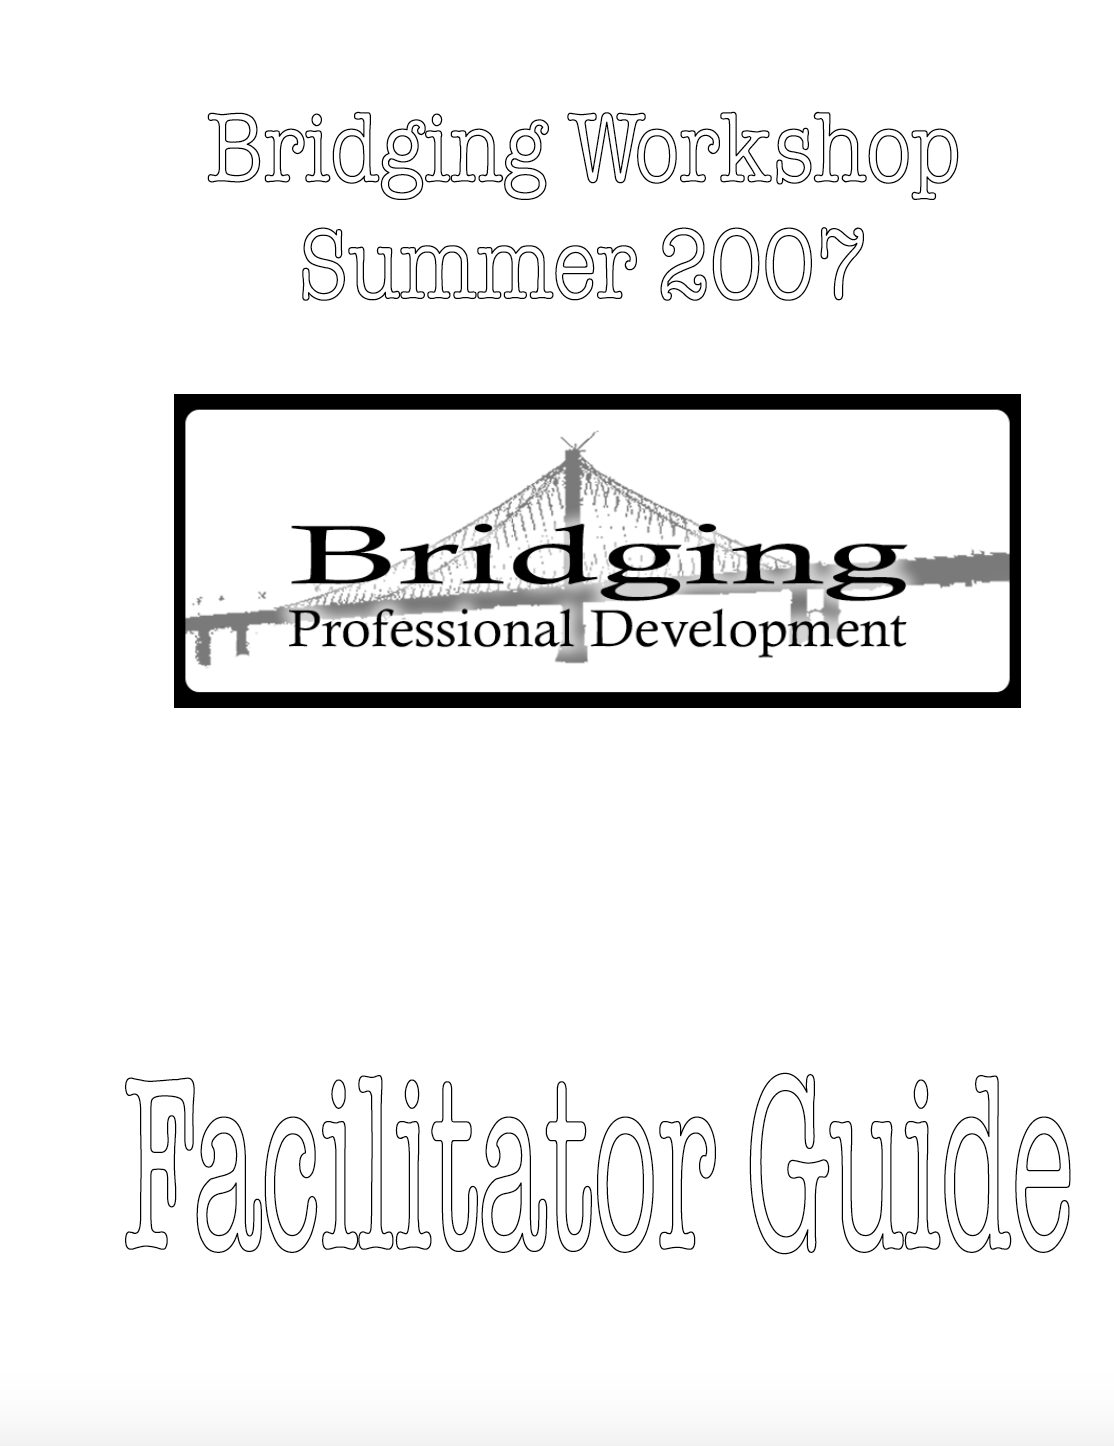 2007 Bridging Workshop Facilitator Guide